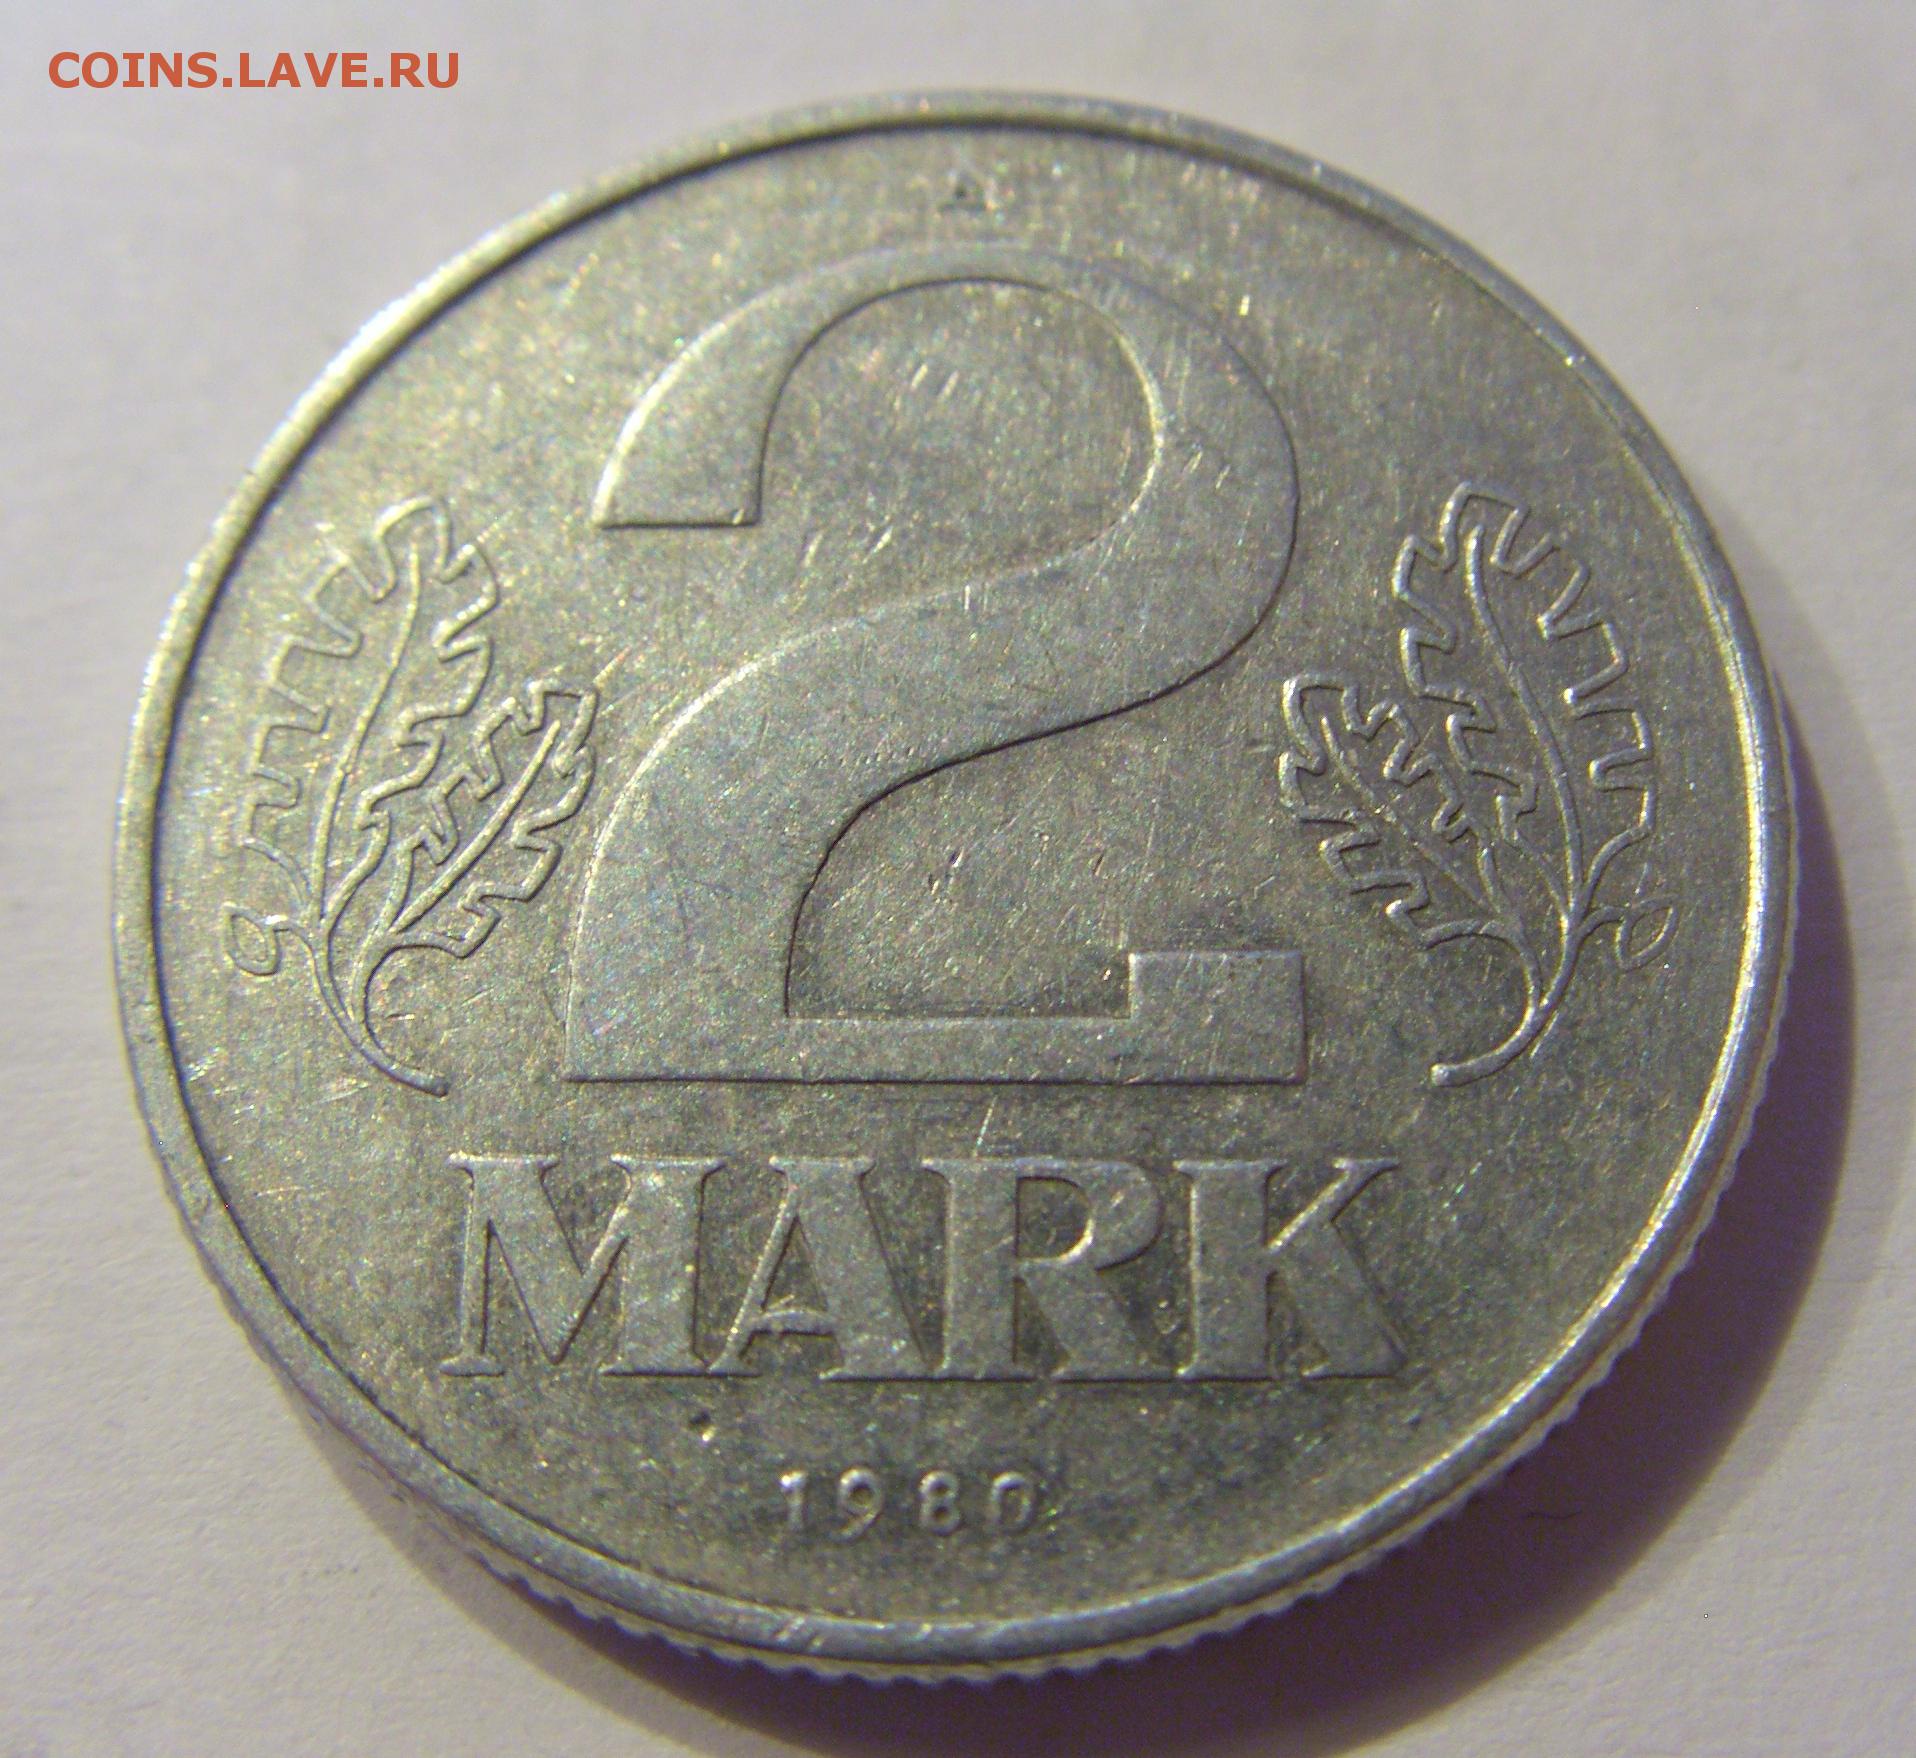 Две марки в рублях. Монеты ГДР 1980. 2 Марки Республики ГДР 1980-1983 года.